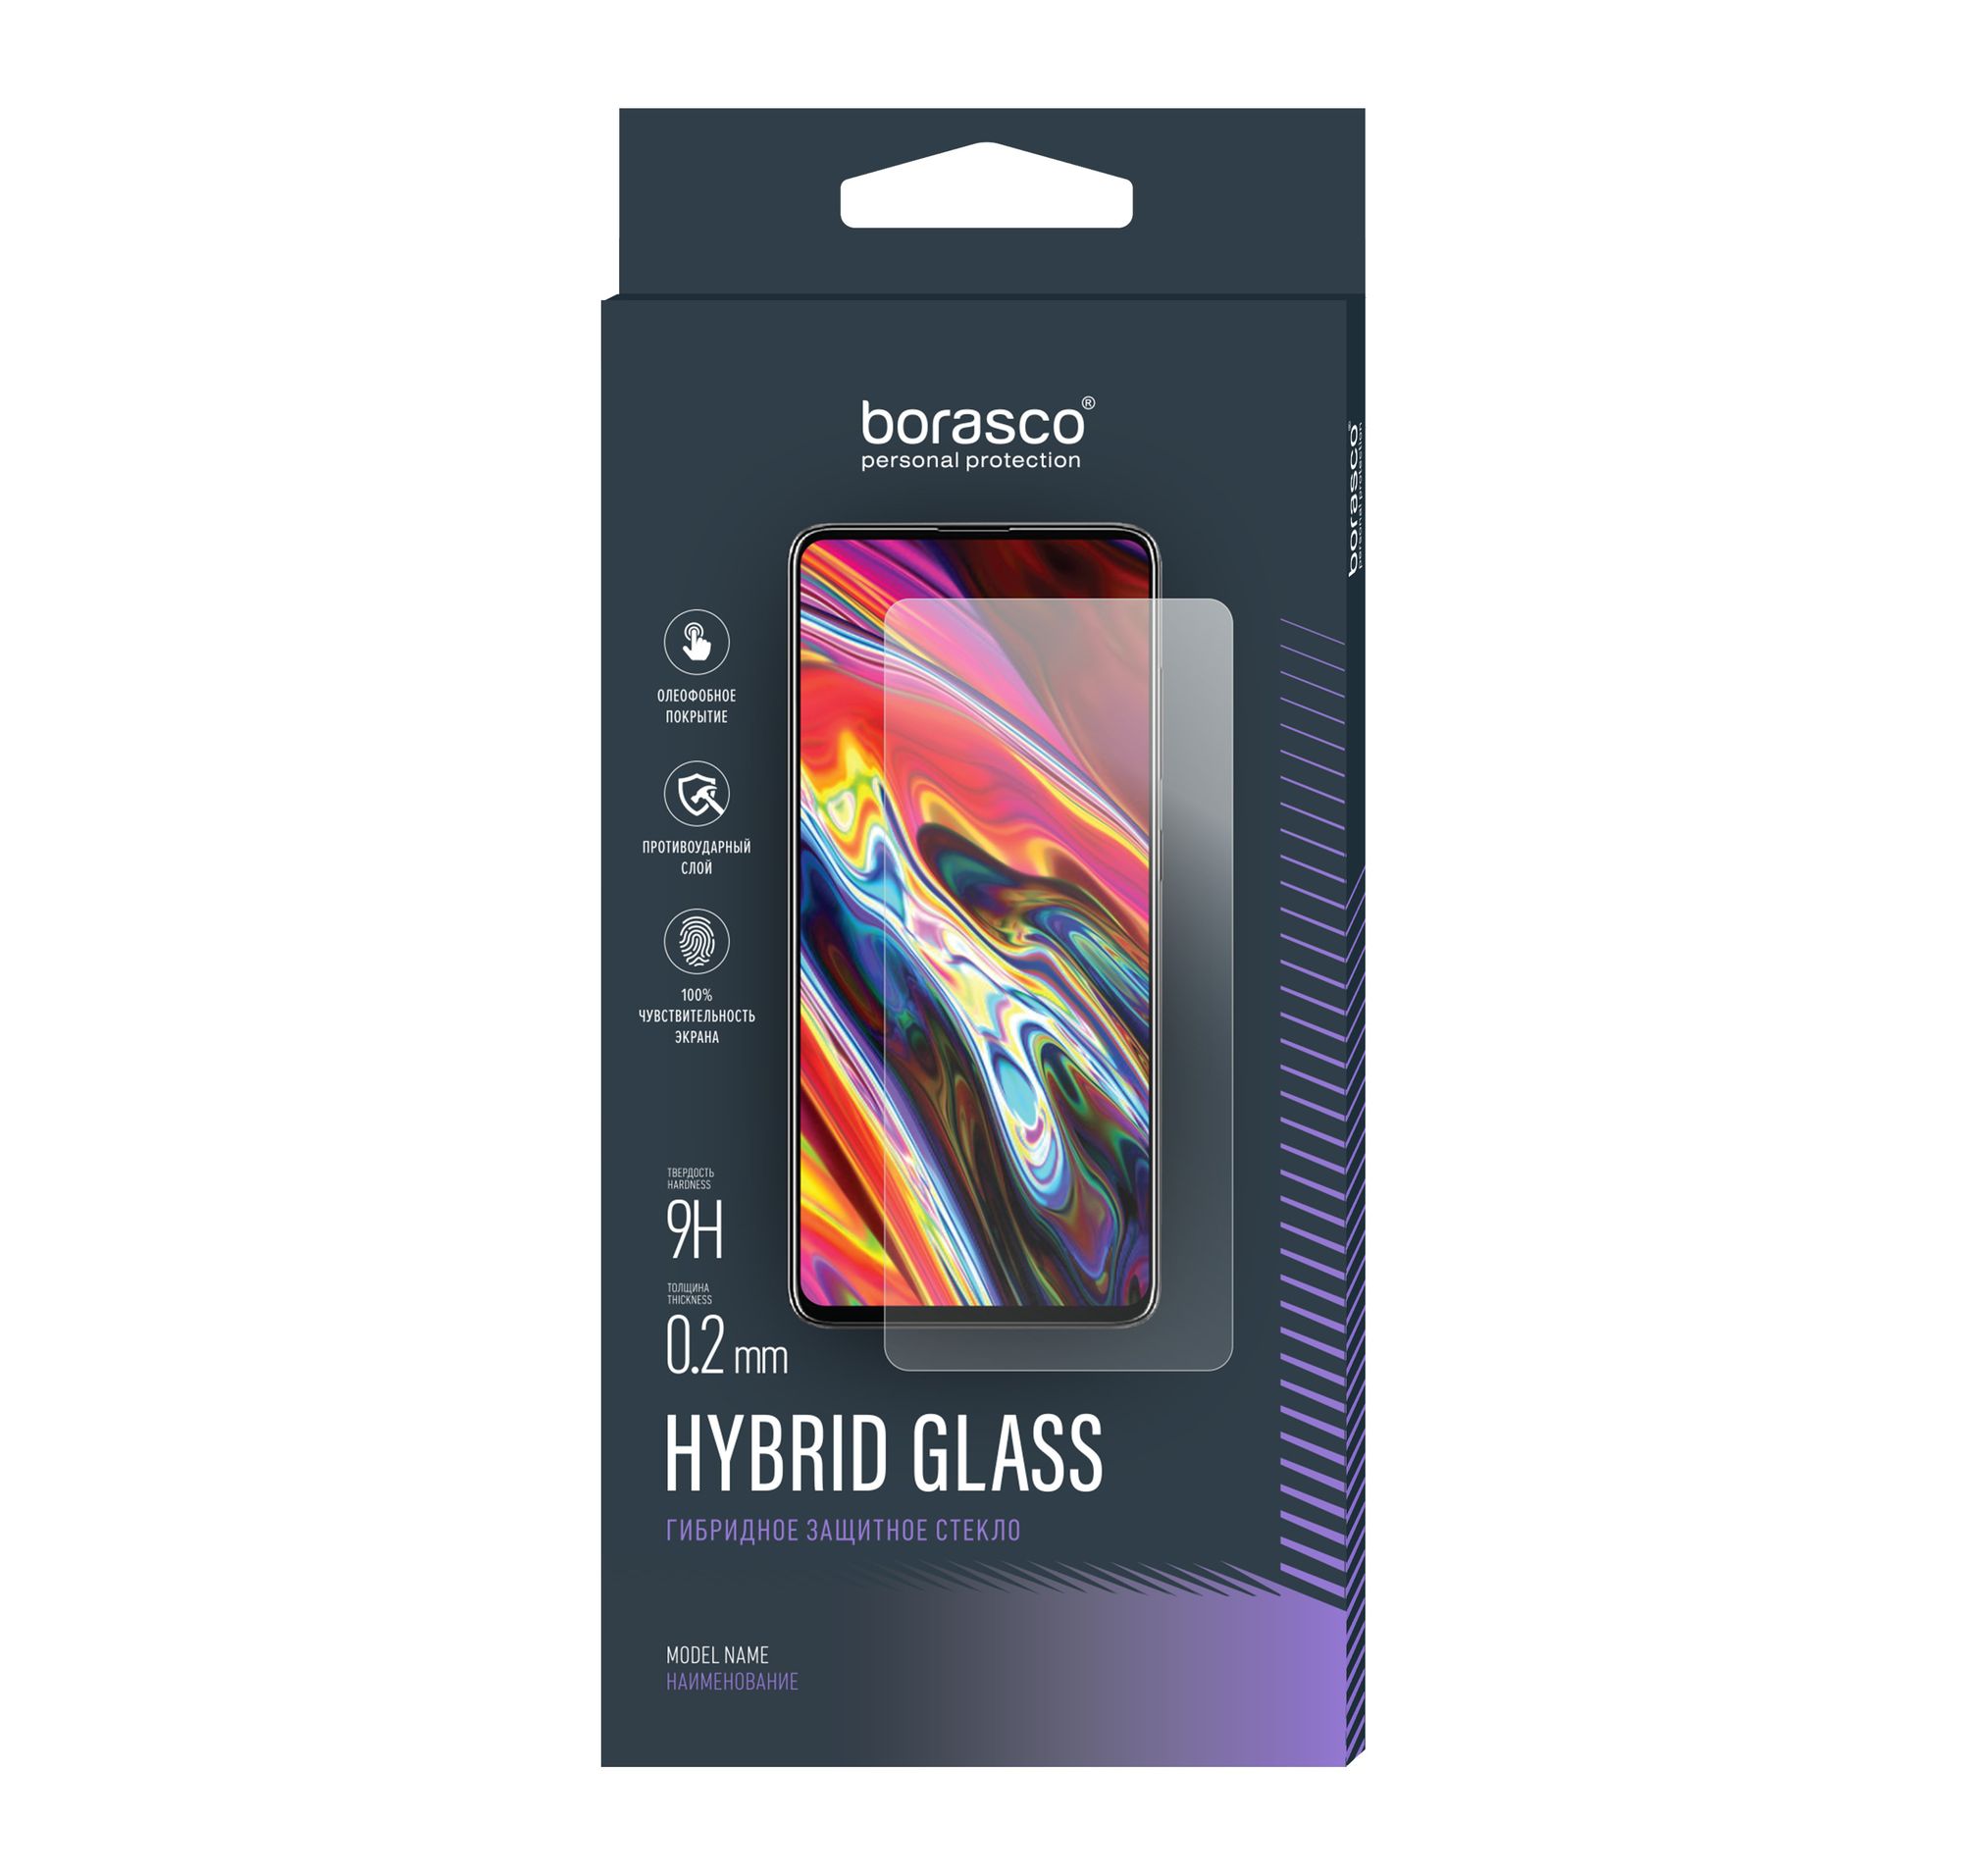 Стекло защитное Hybrid Glass VSP 0,26 мм для iPhone 6 Plus/6S Plus усиленное защитное стекло для iphone 6 plus 6s plus 7 plus 8 plus 18d